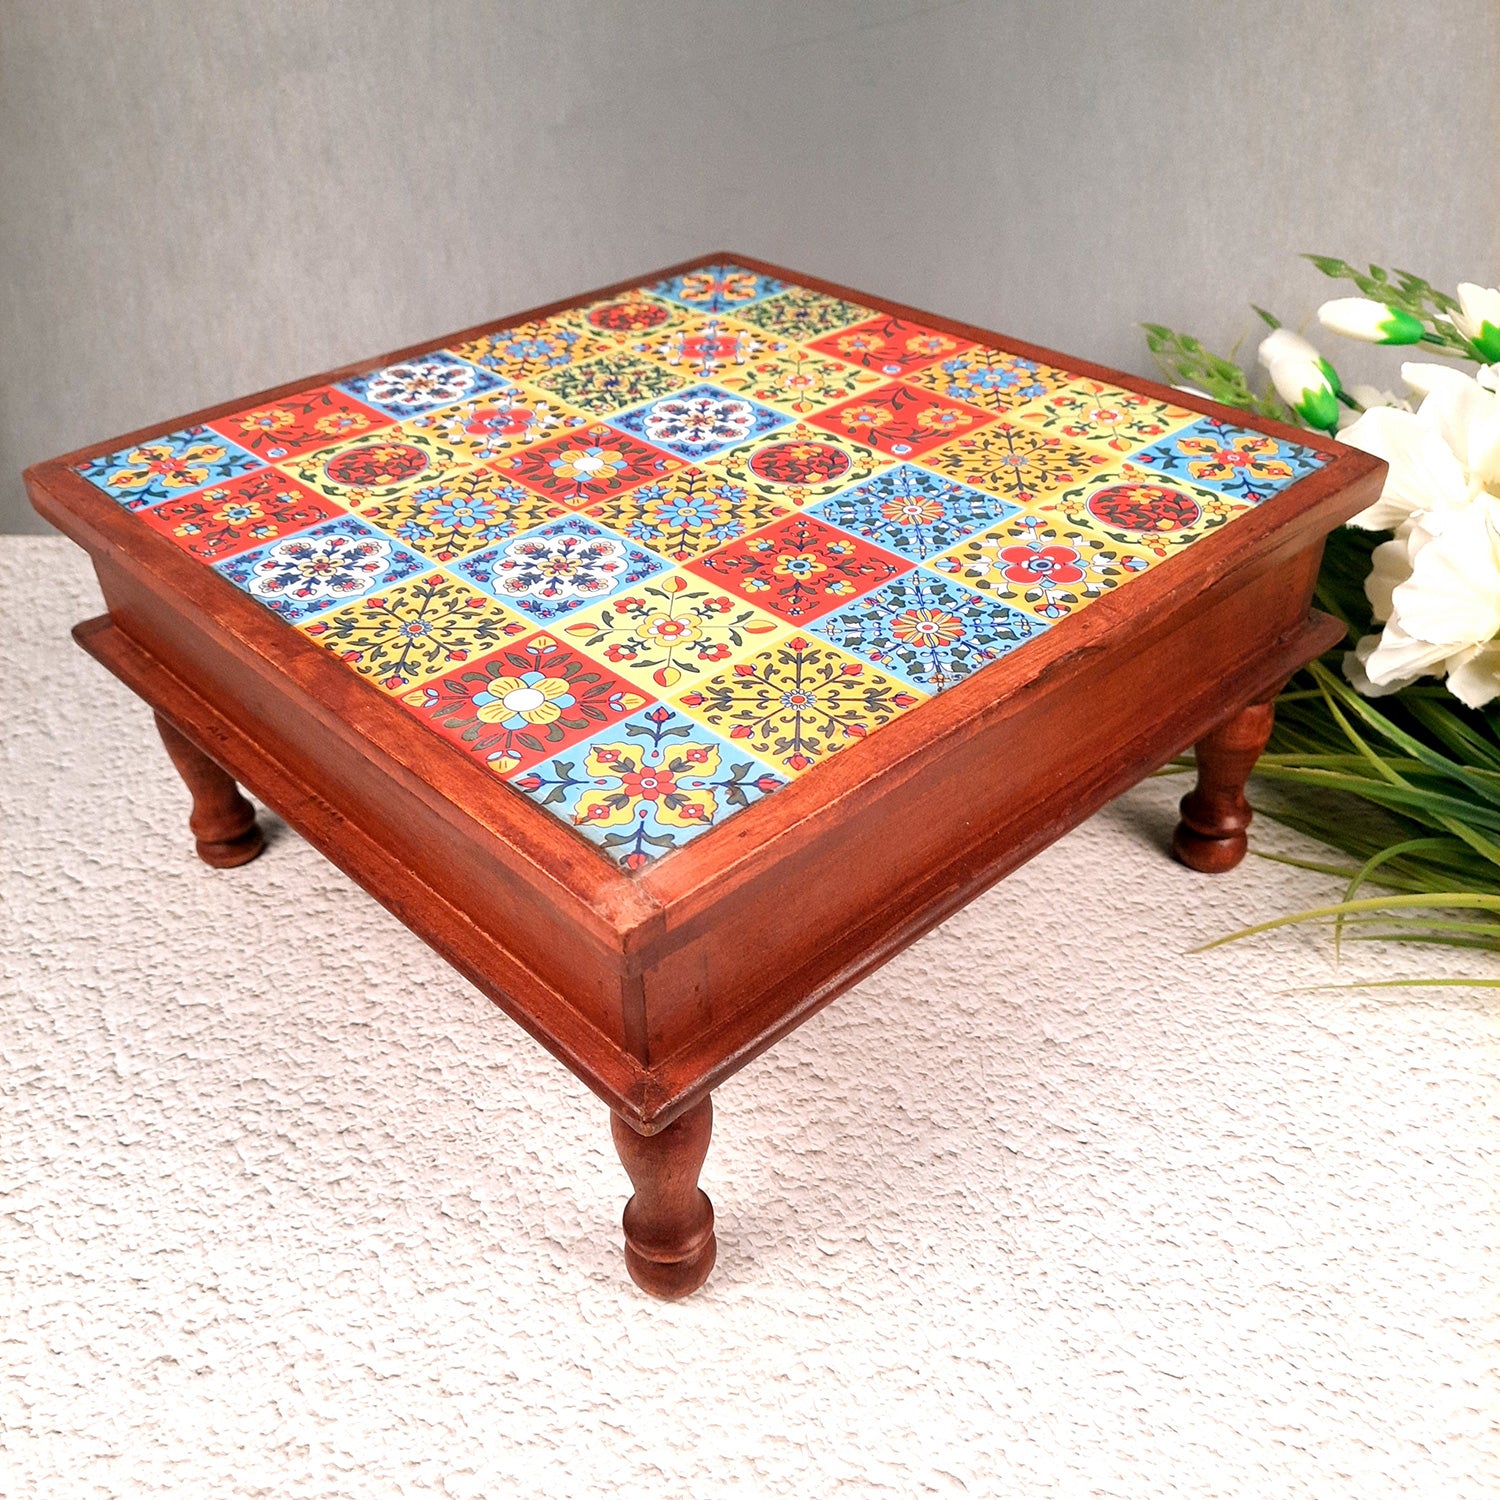 Wooden Puja Chowki Bajot with Ceramic Tile Top | Choki for Sitting - for Pooja, Weddings, Home Decor, Corner Decoration & Festivals - 12 Inch - Apkamart